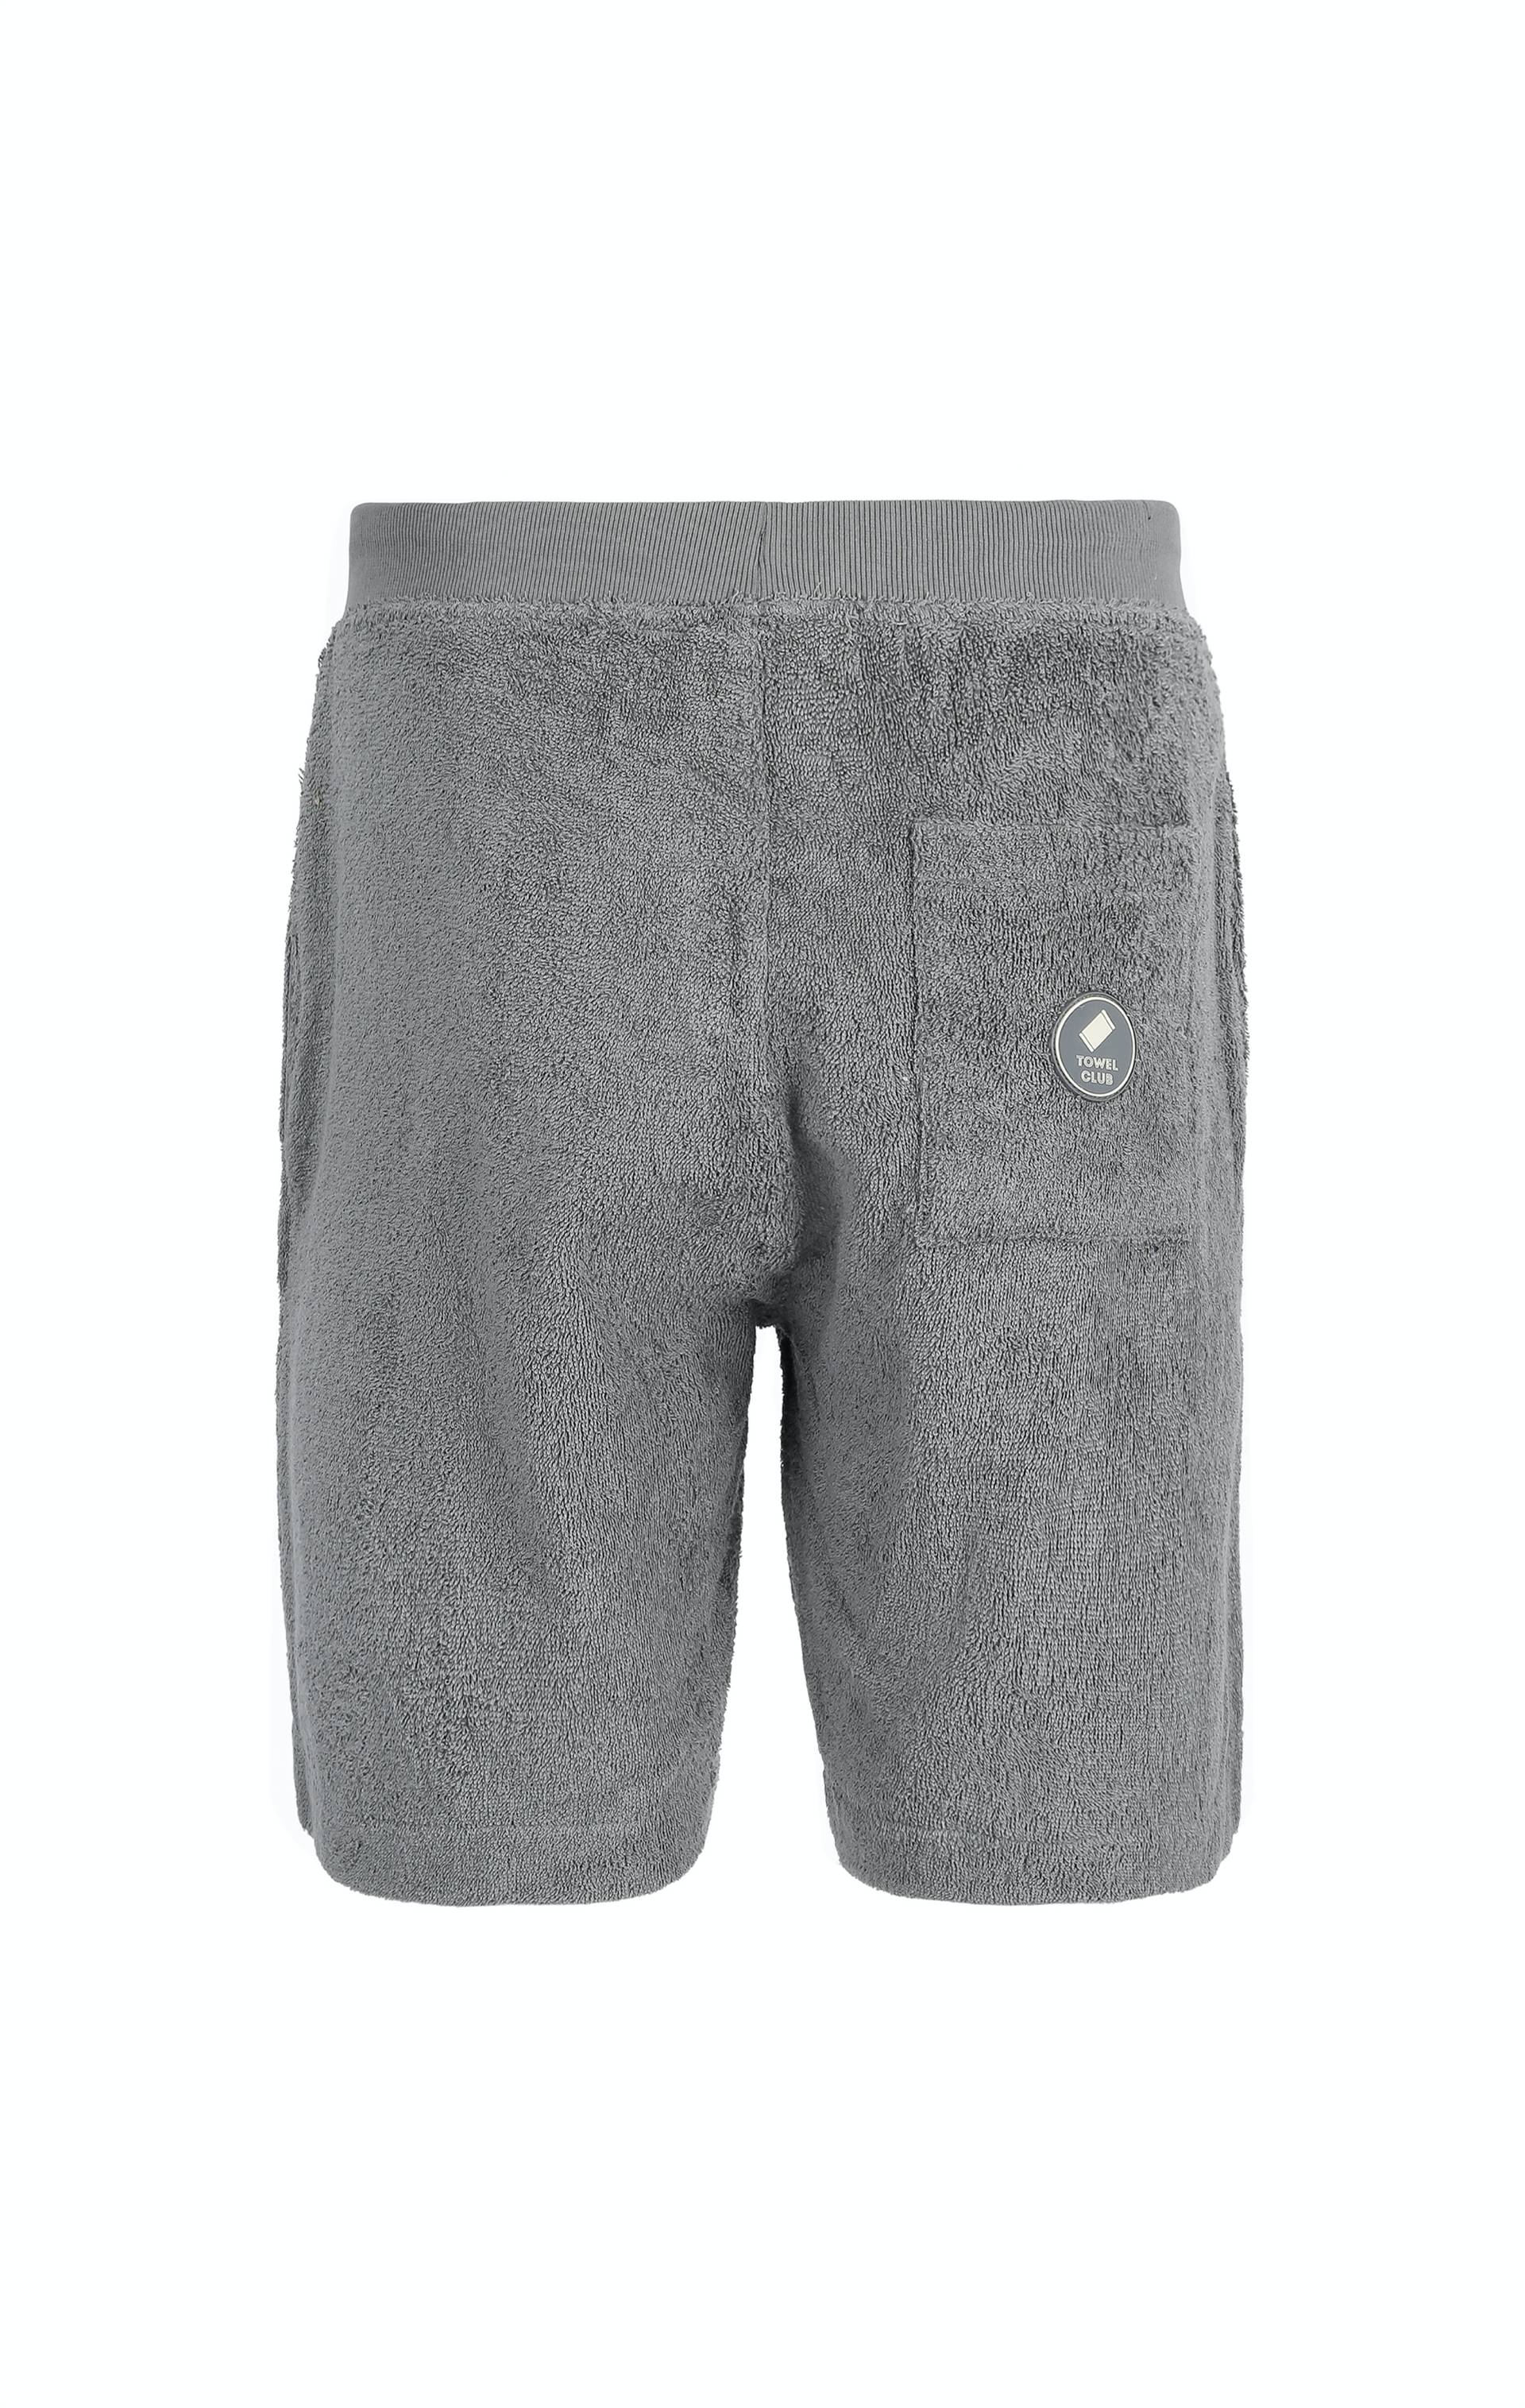 Onepiece Towel Shorts Grey - 2